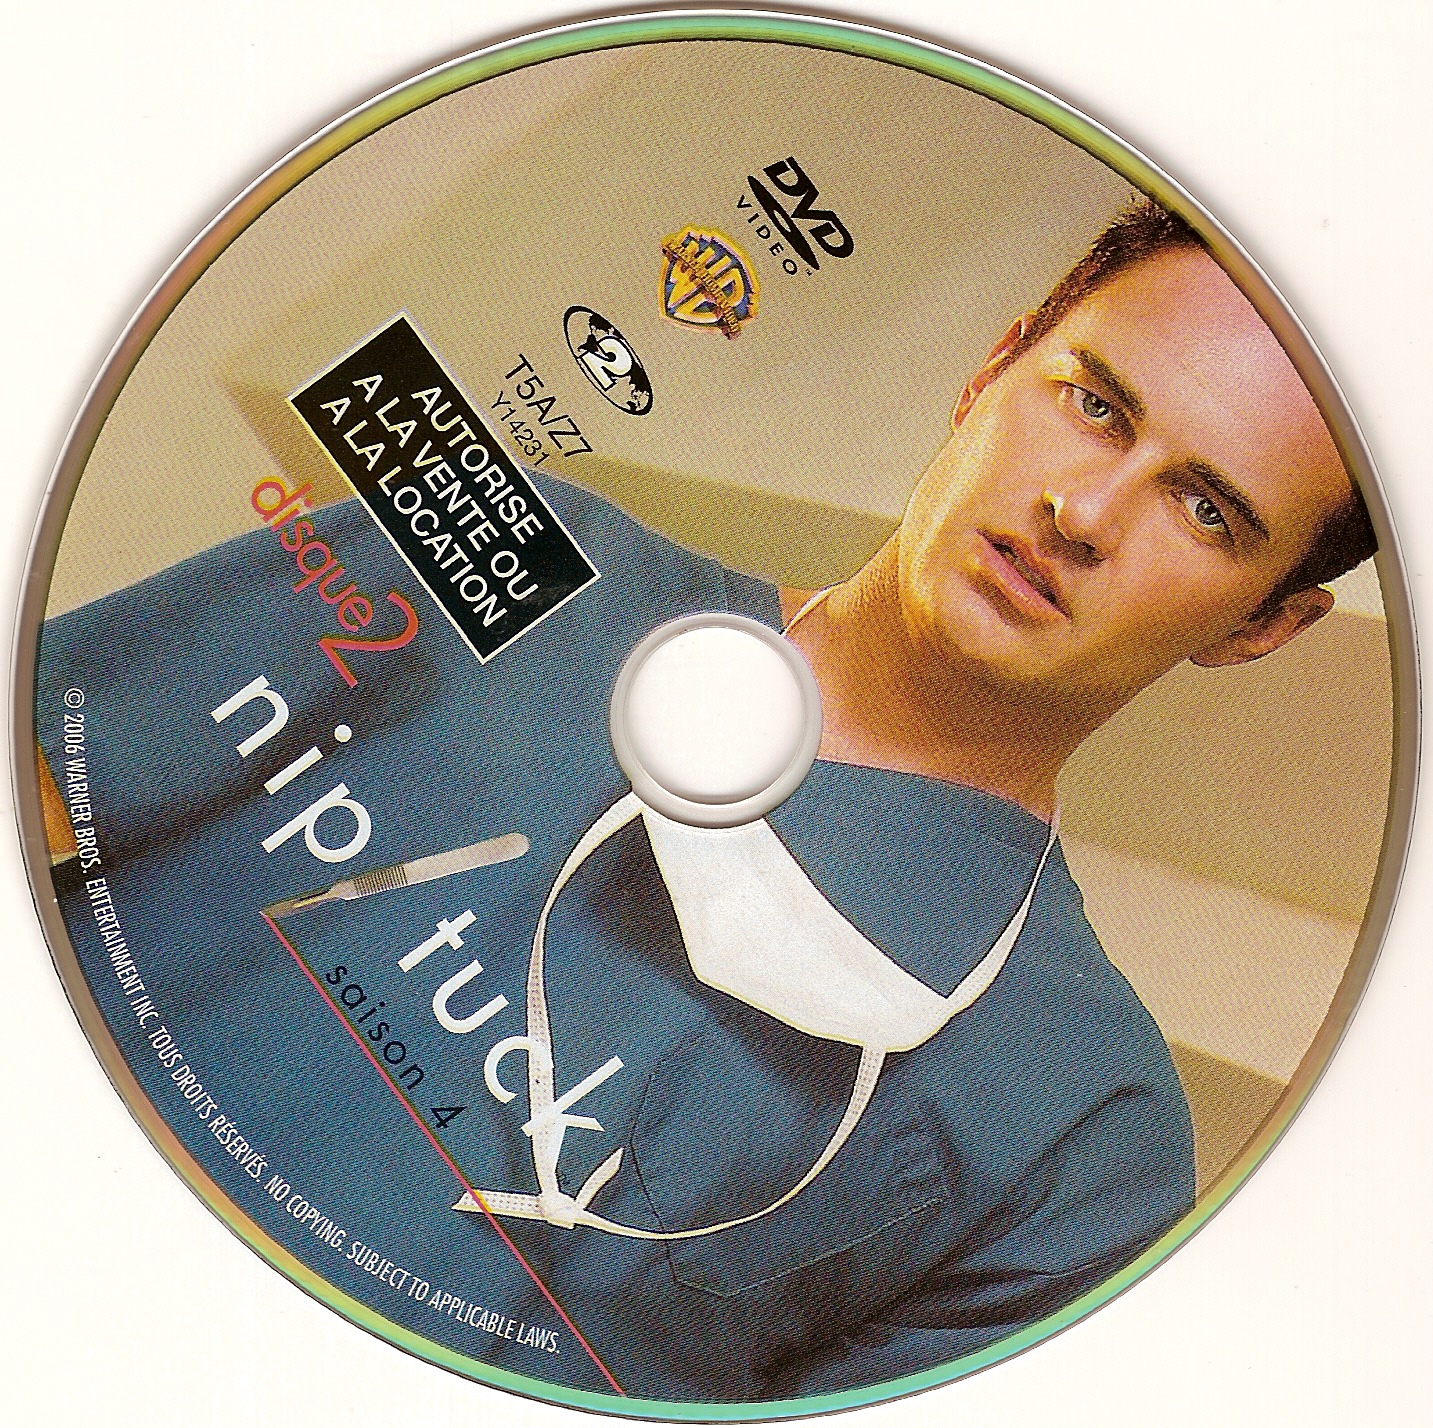 Nip-Tuck saison 4 DVD 4